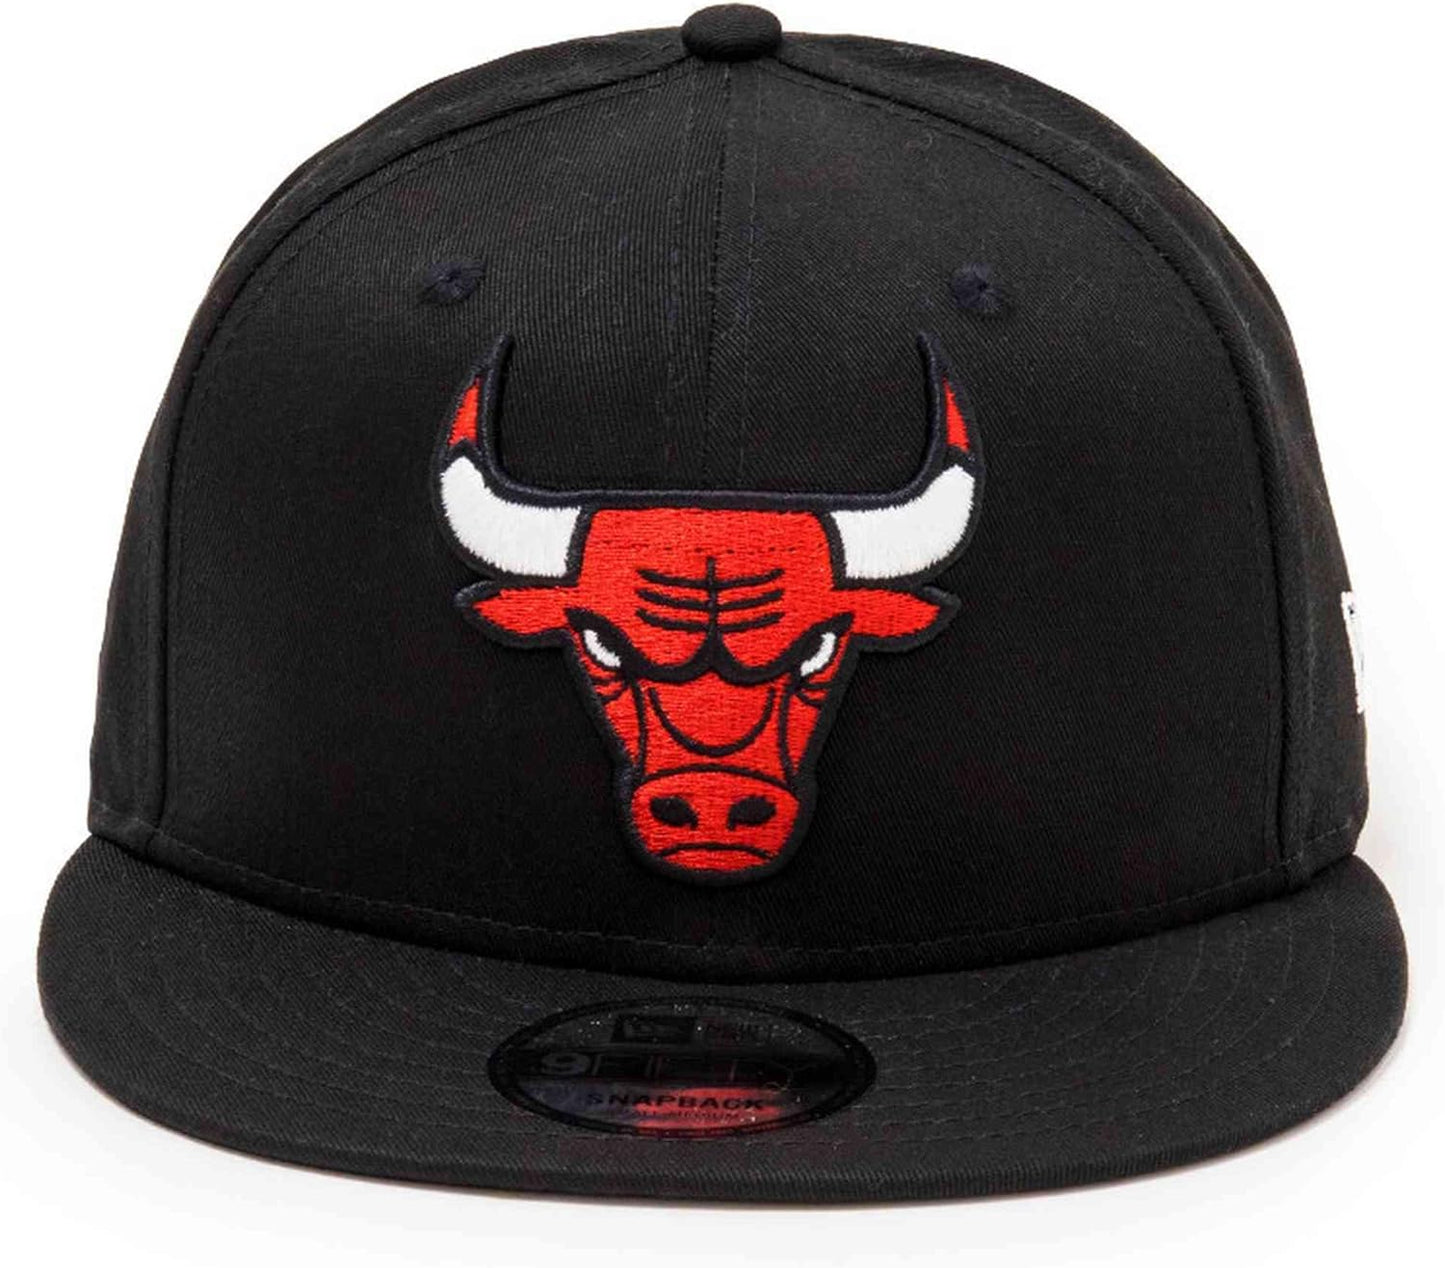 NEW ERA Chicago Bulls 9FIFTY Snapback Cap - Black/Team